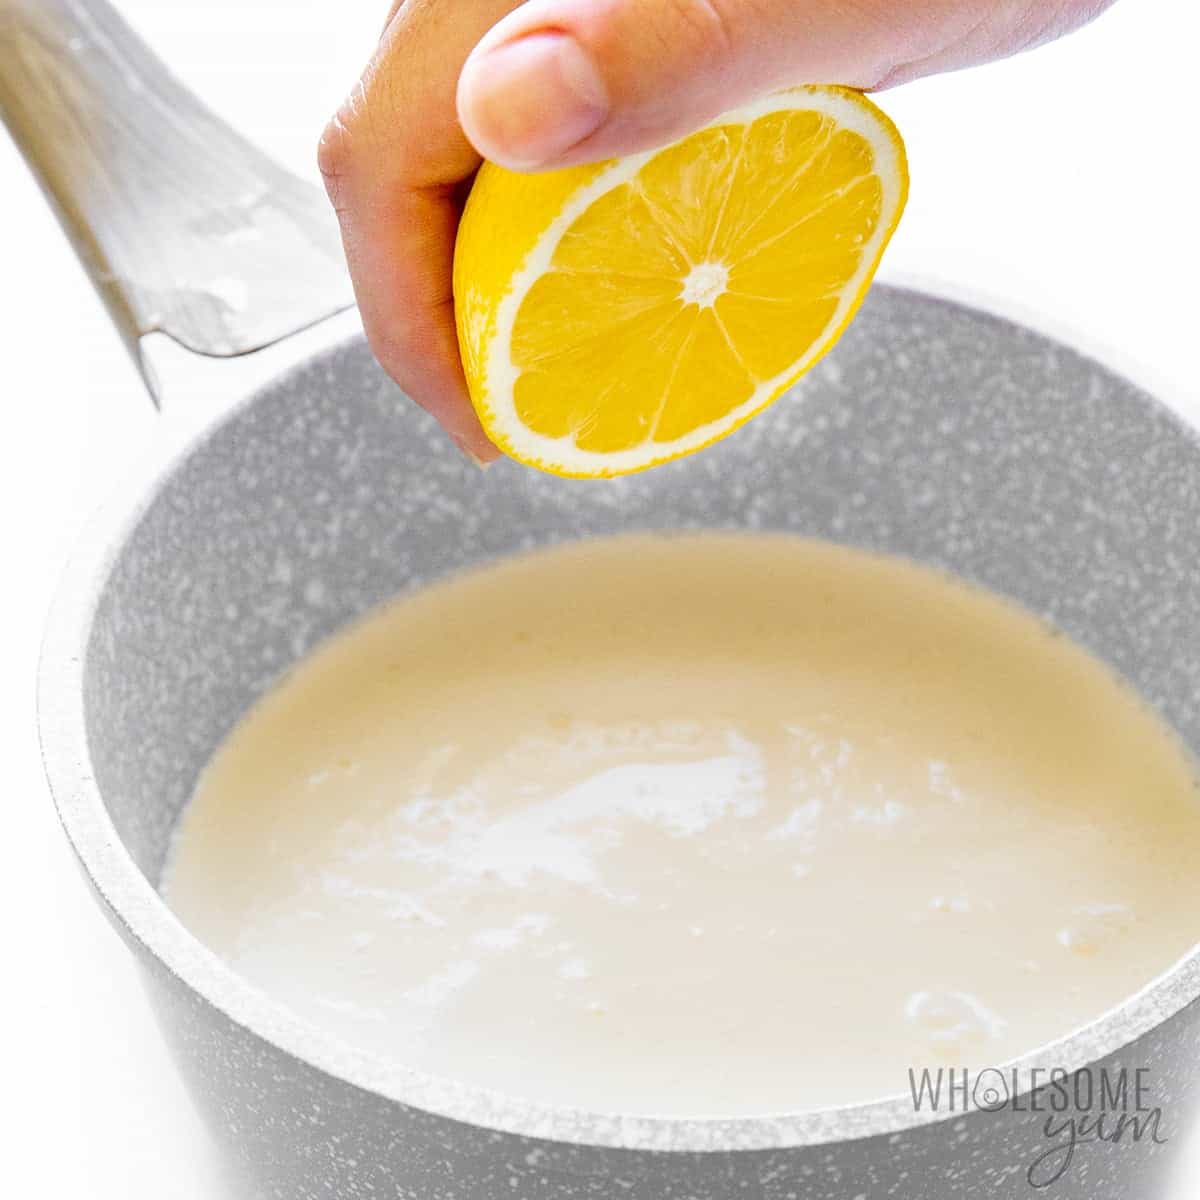 Hand squeezing a lemon over cream in saucepan